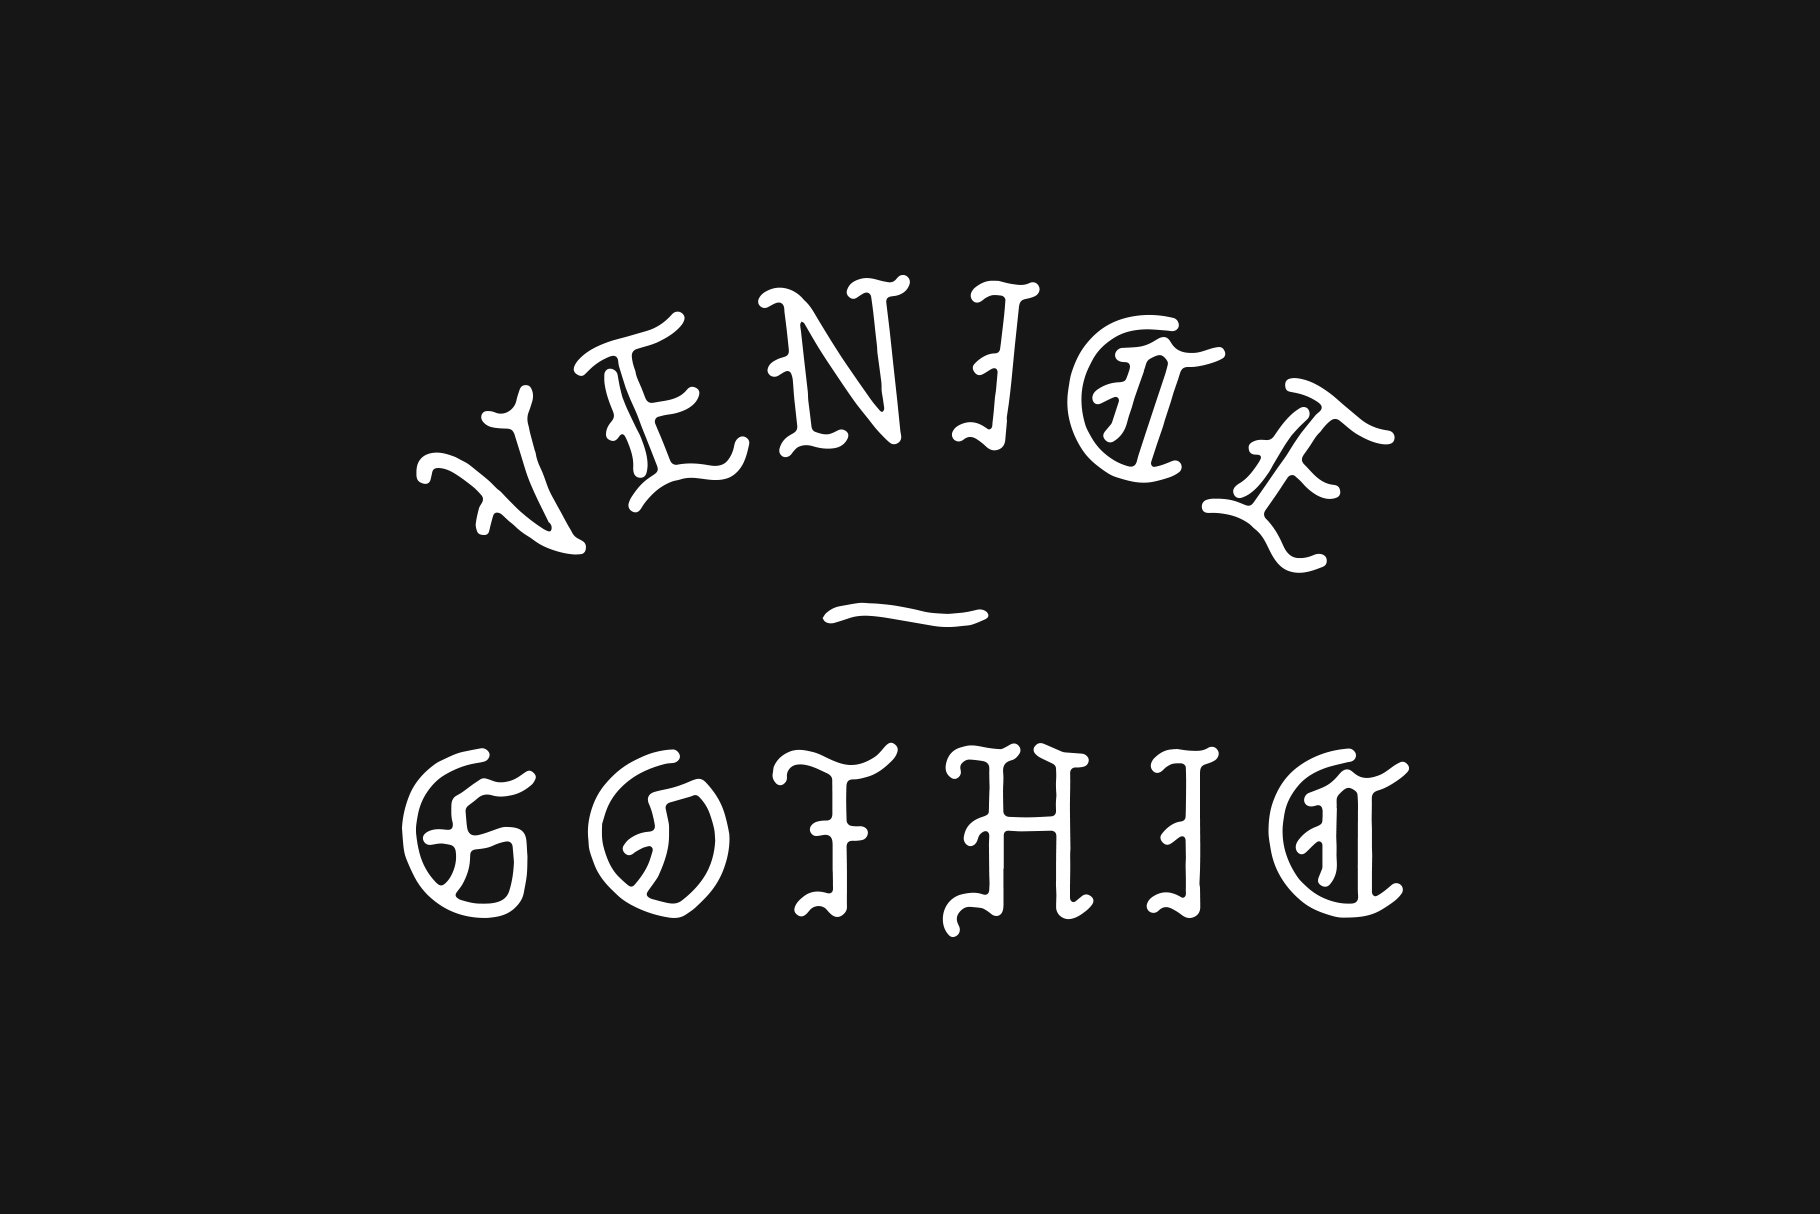 Venice Gothic - A Monoline Typeface preview image.